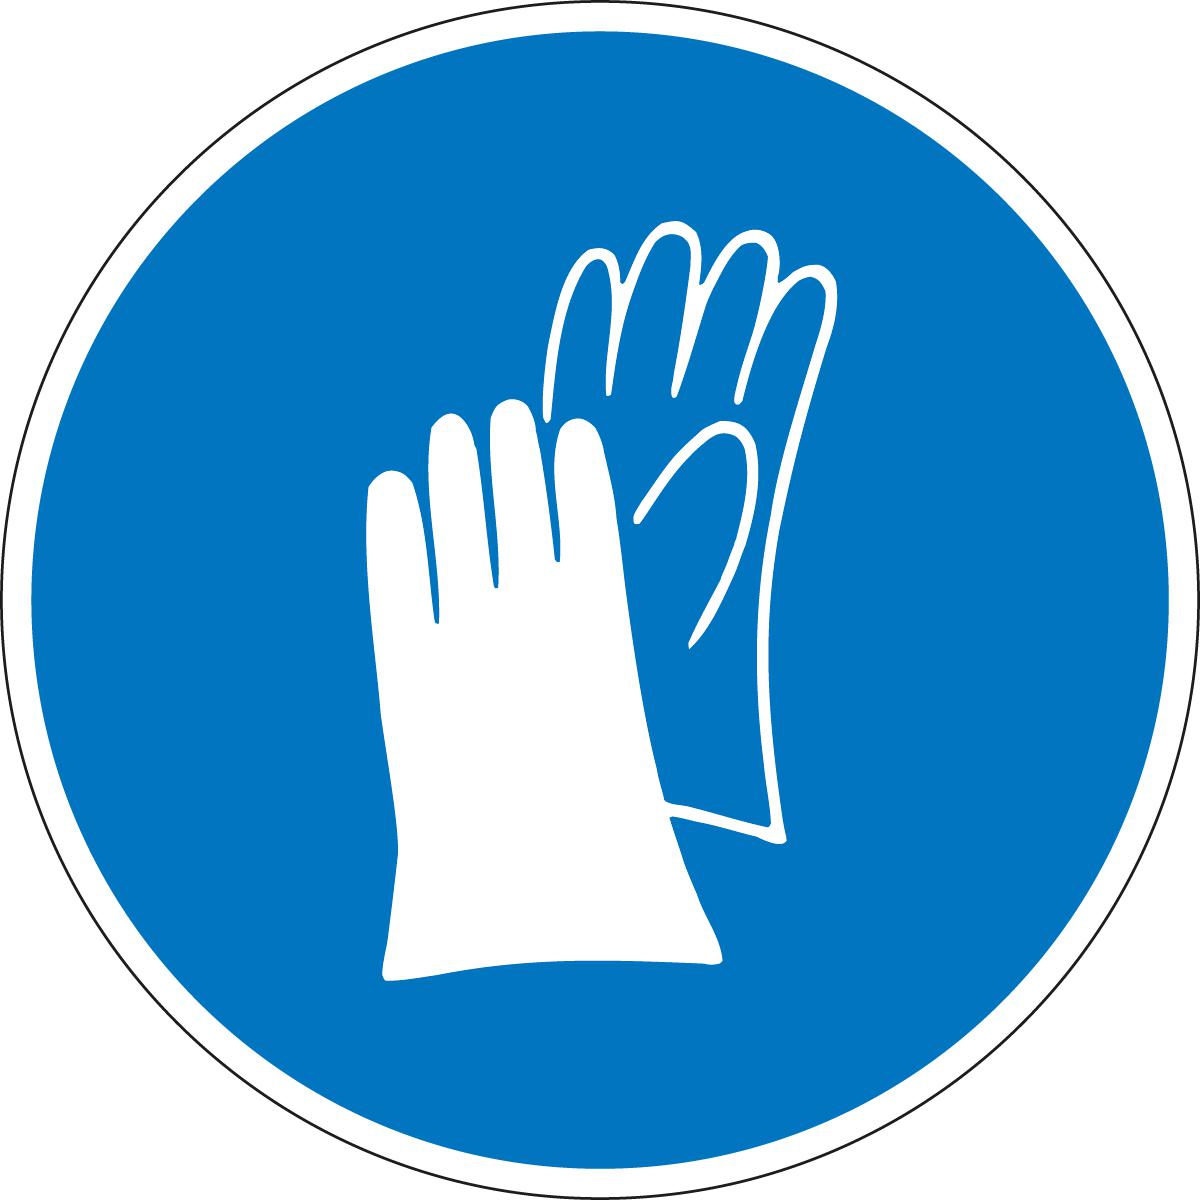 Gebodsbord handbescherming verplicht, wandbord  ZOOM